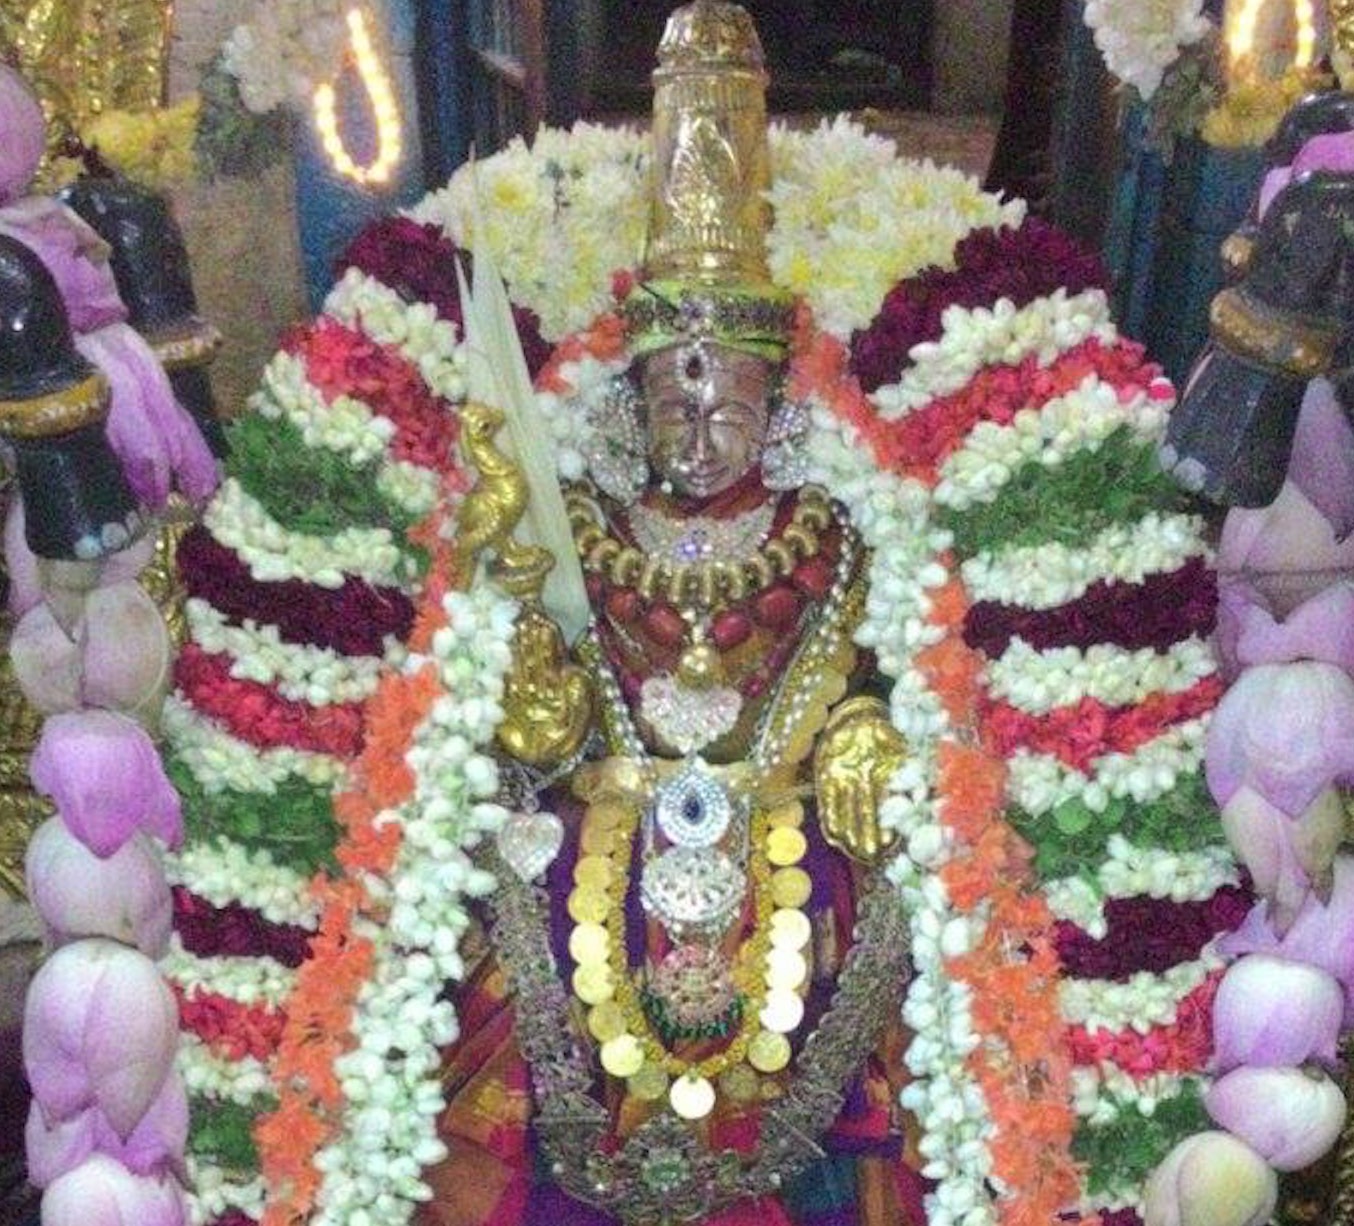 Kooram Sri Pankajavalli Thayar